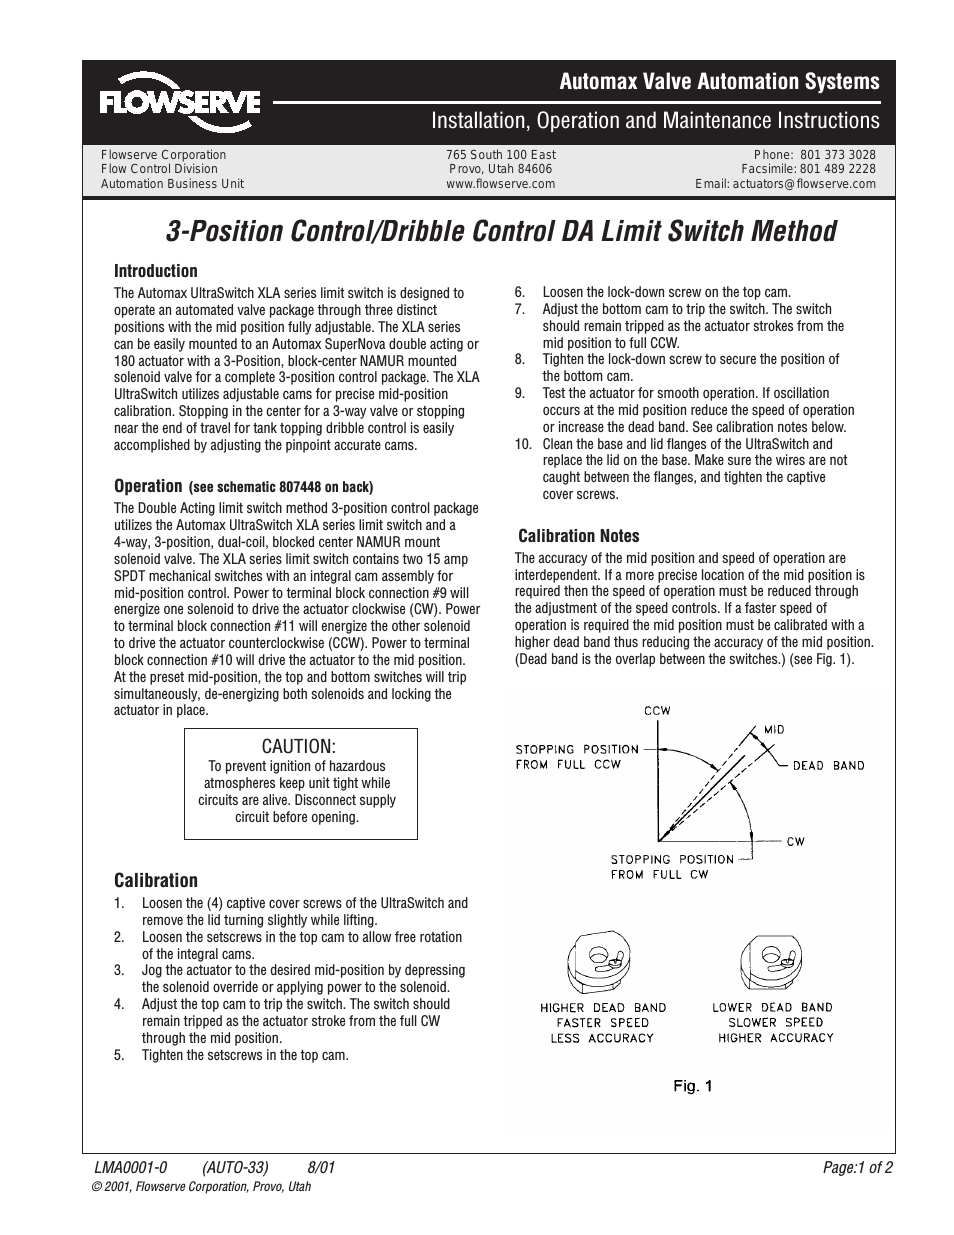 DA Limit Switch Method 3-Position Control